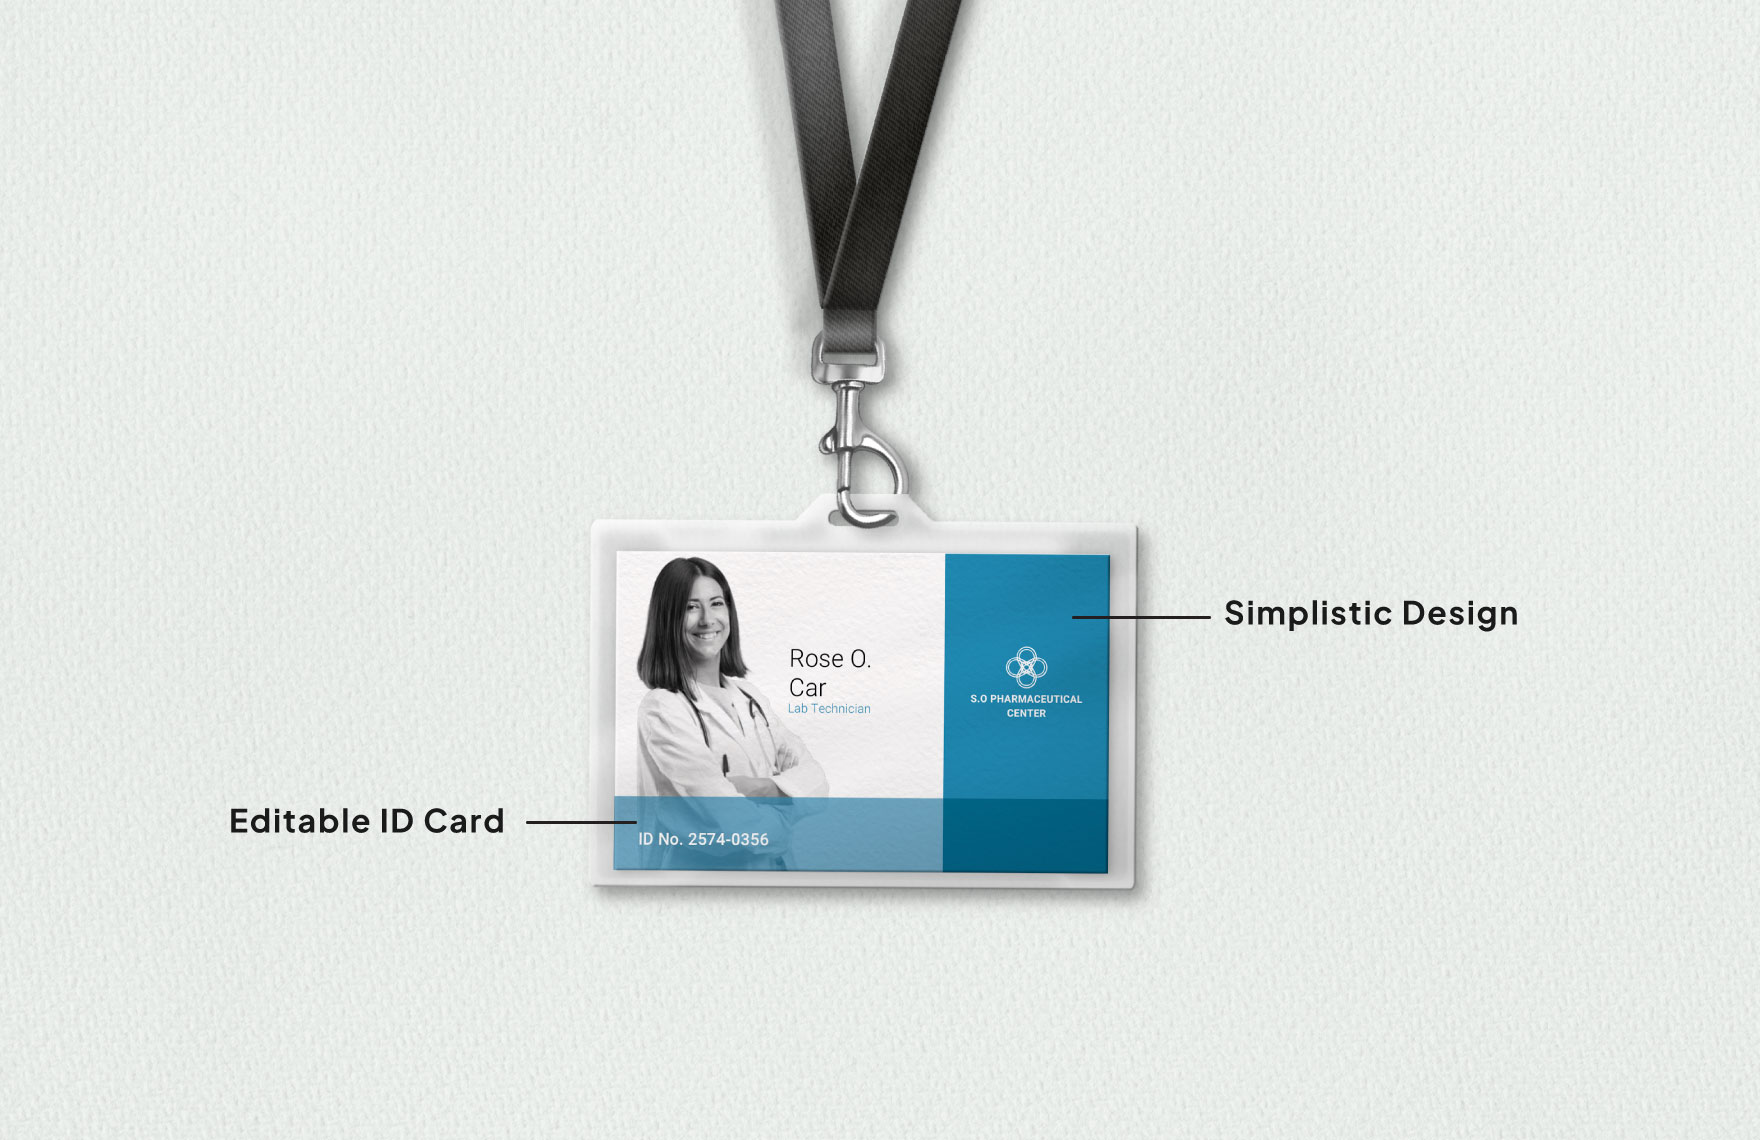 Pharma ID Card Template